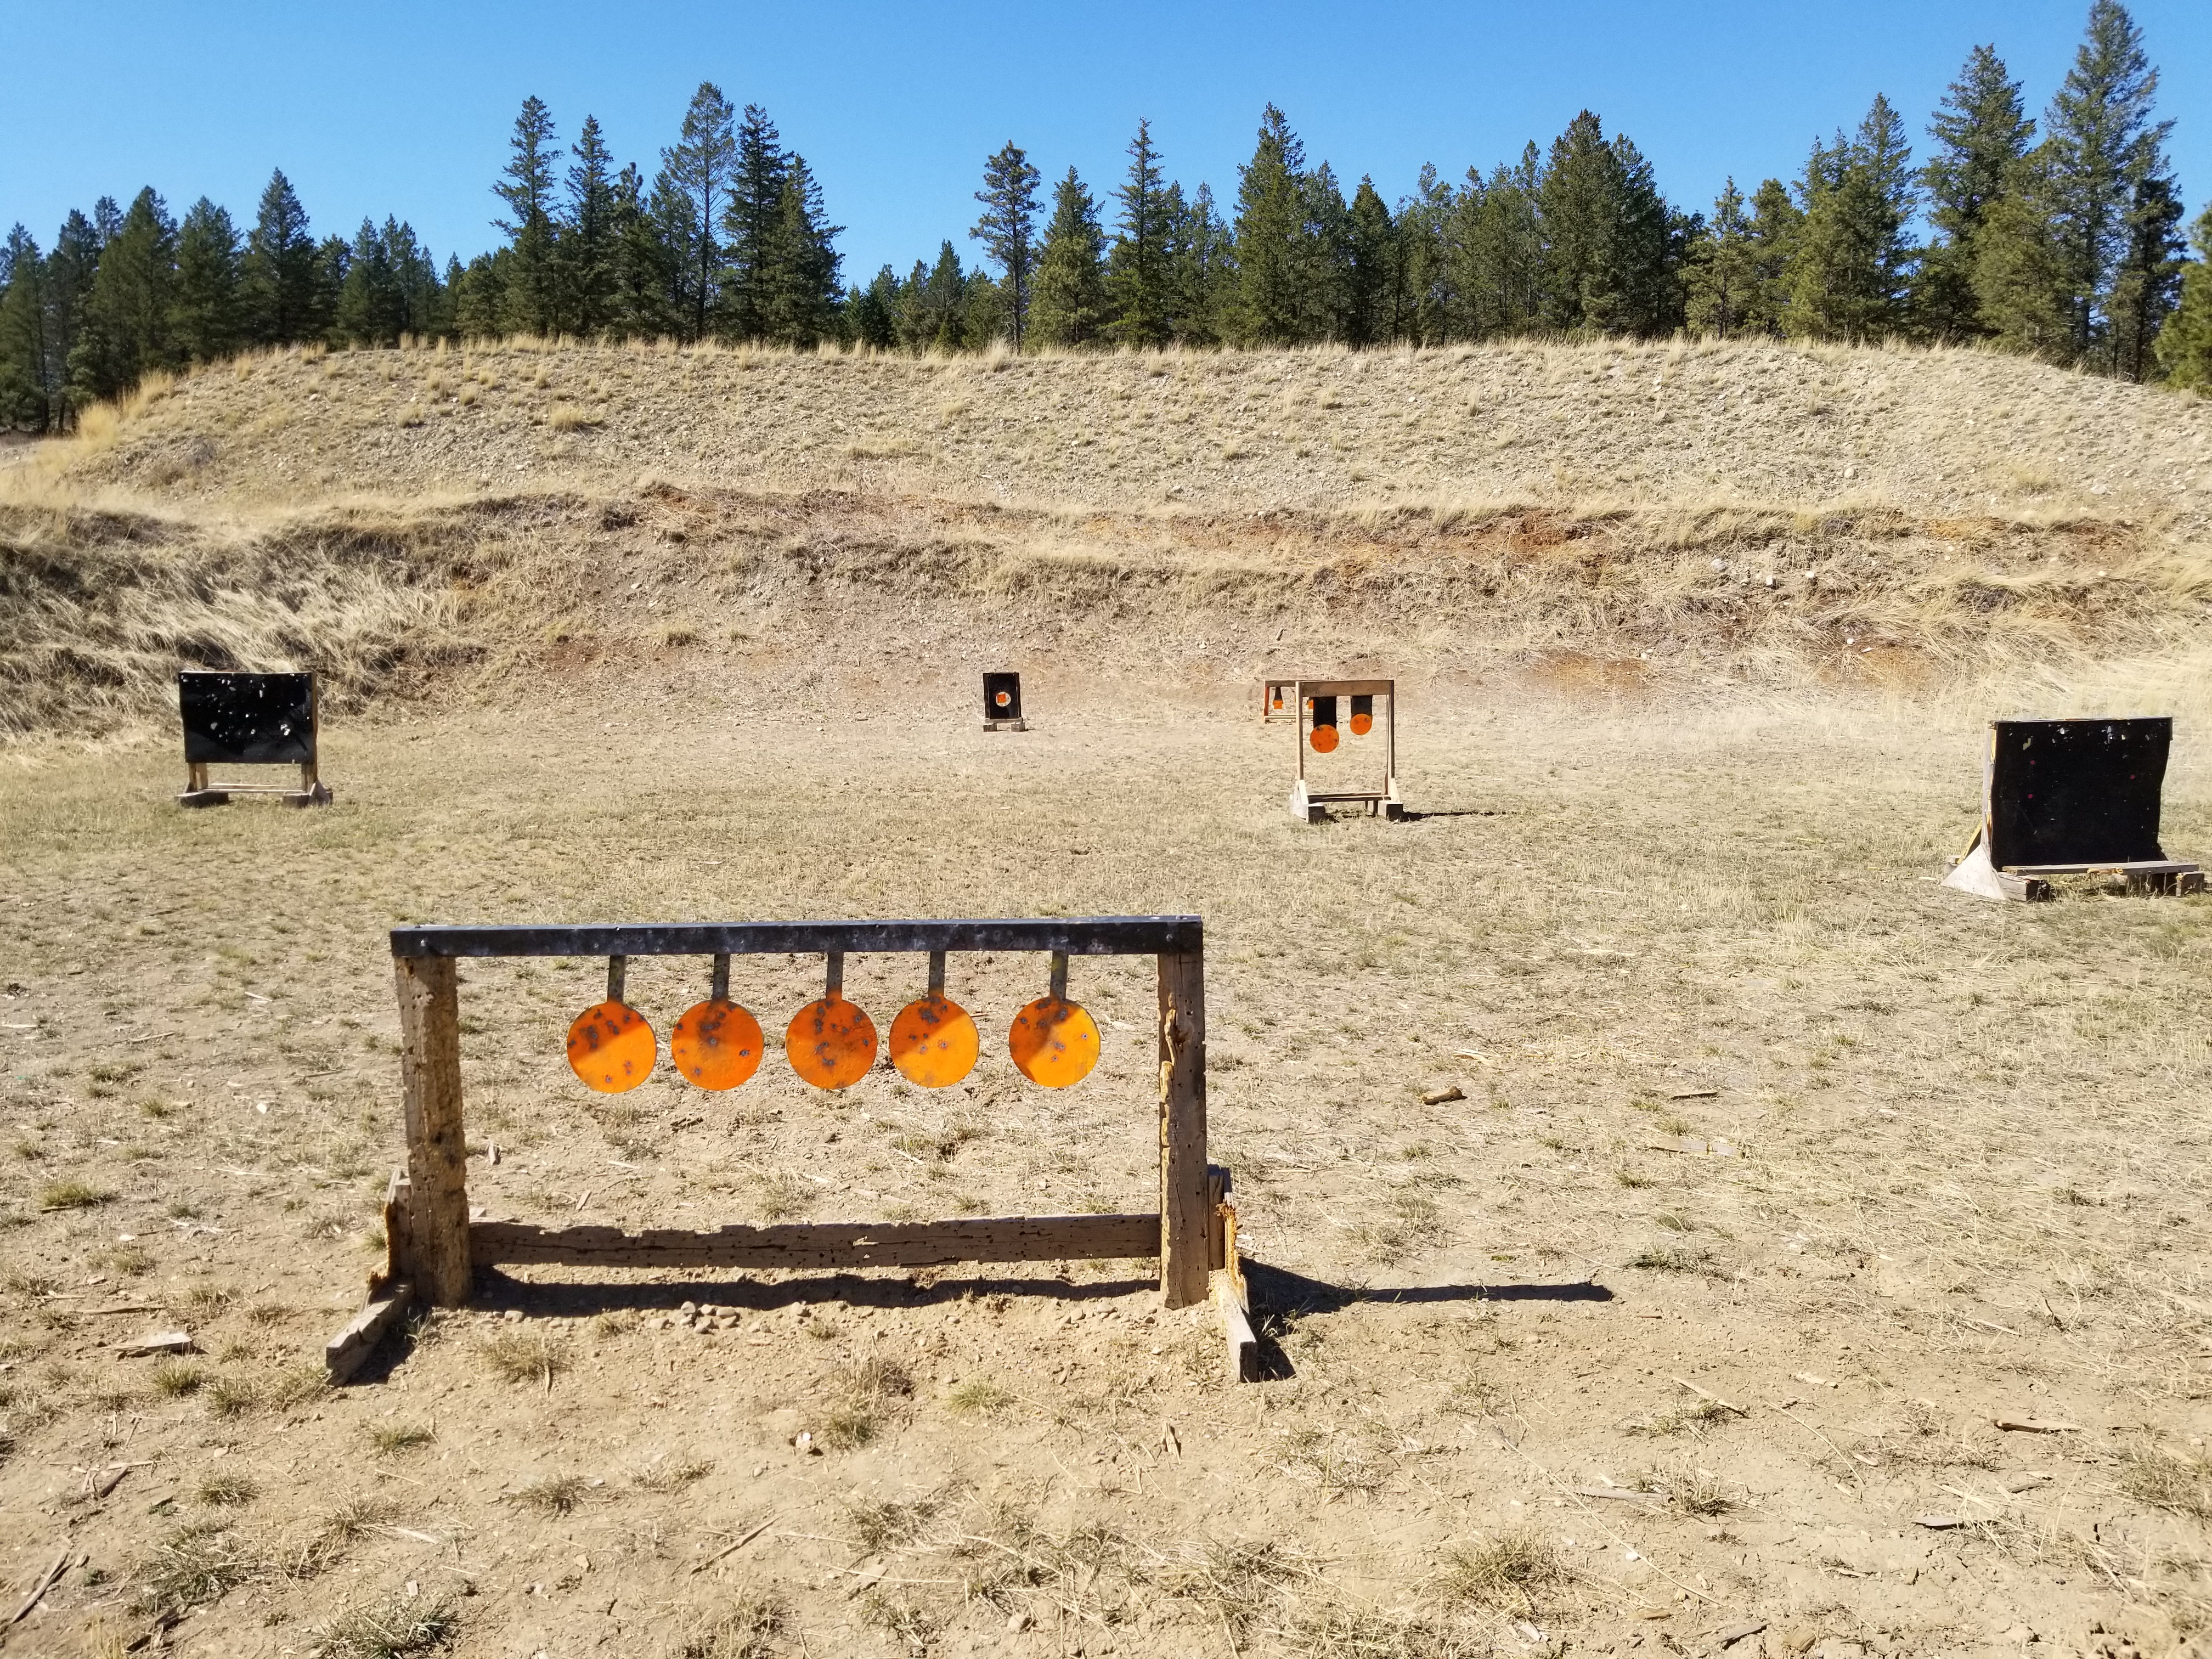 Range 5 targets